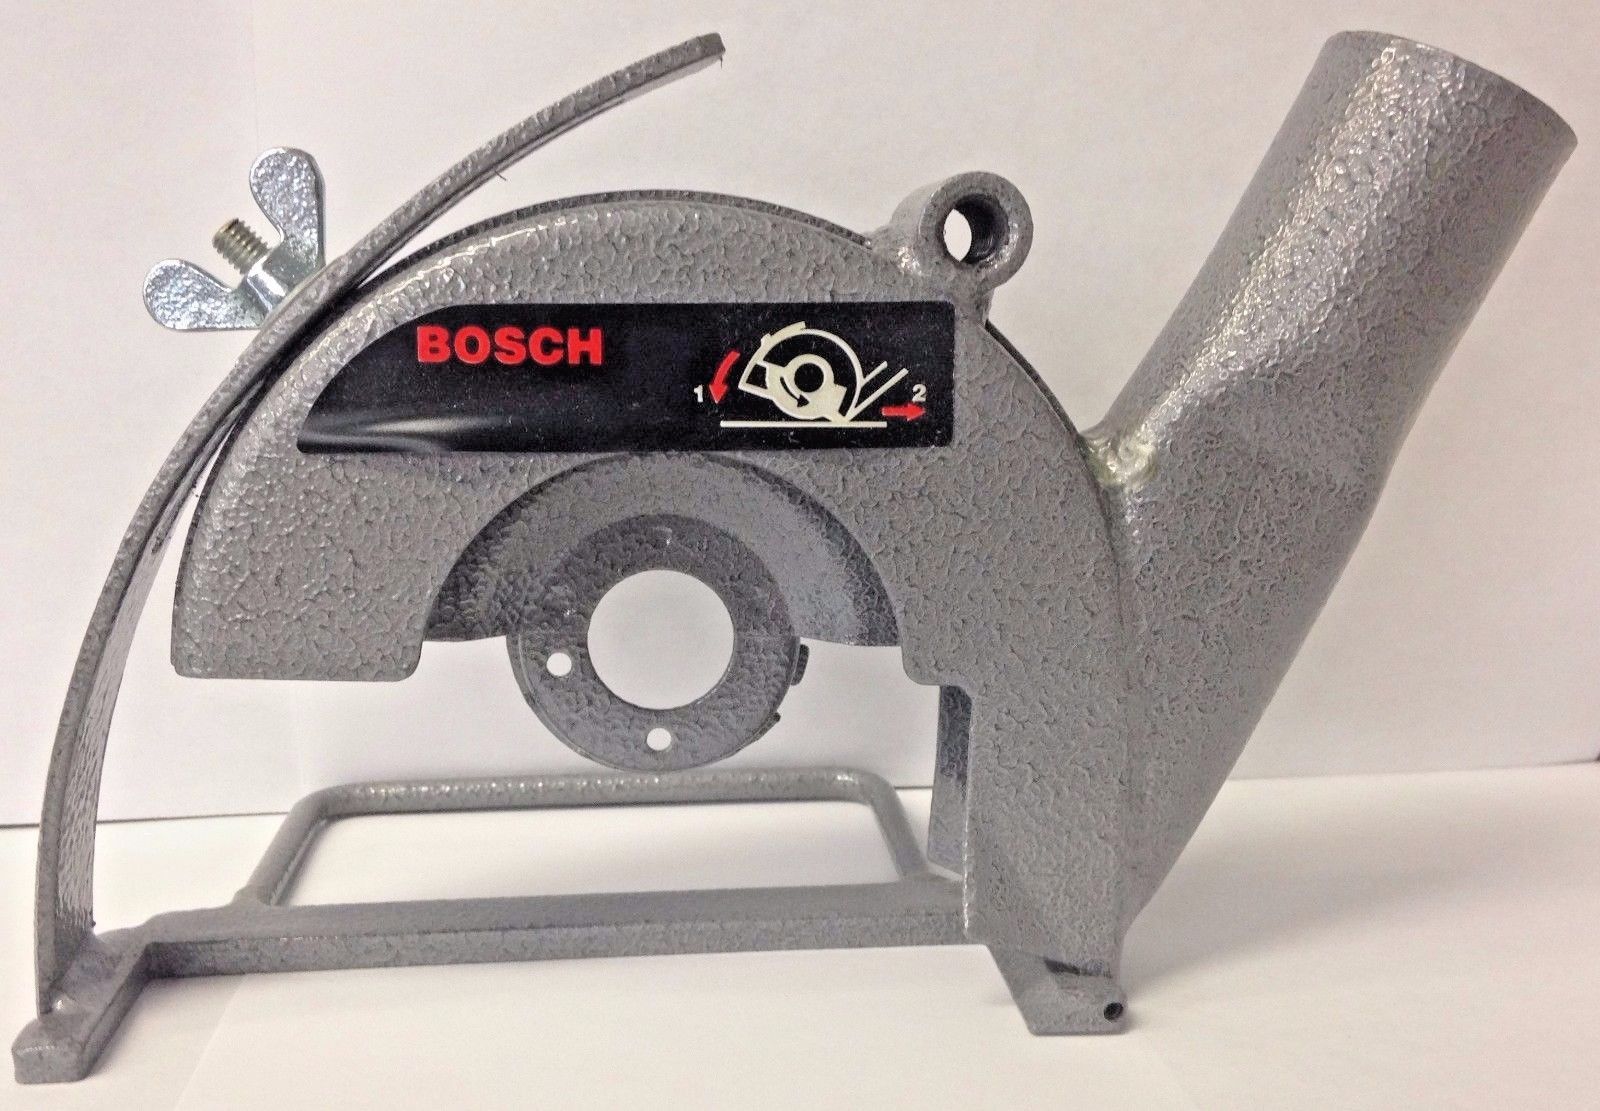 Bosch 2605510144 4-1/2", 5" Clic Dust Guard Assembly